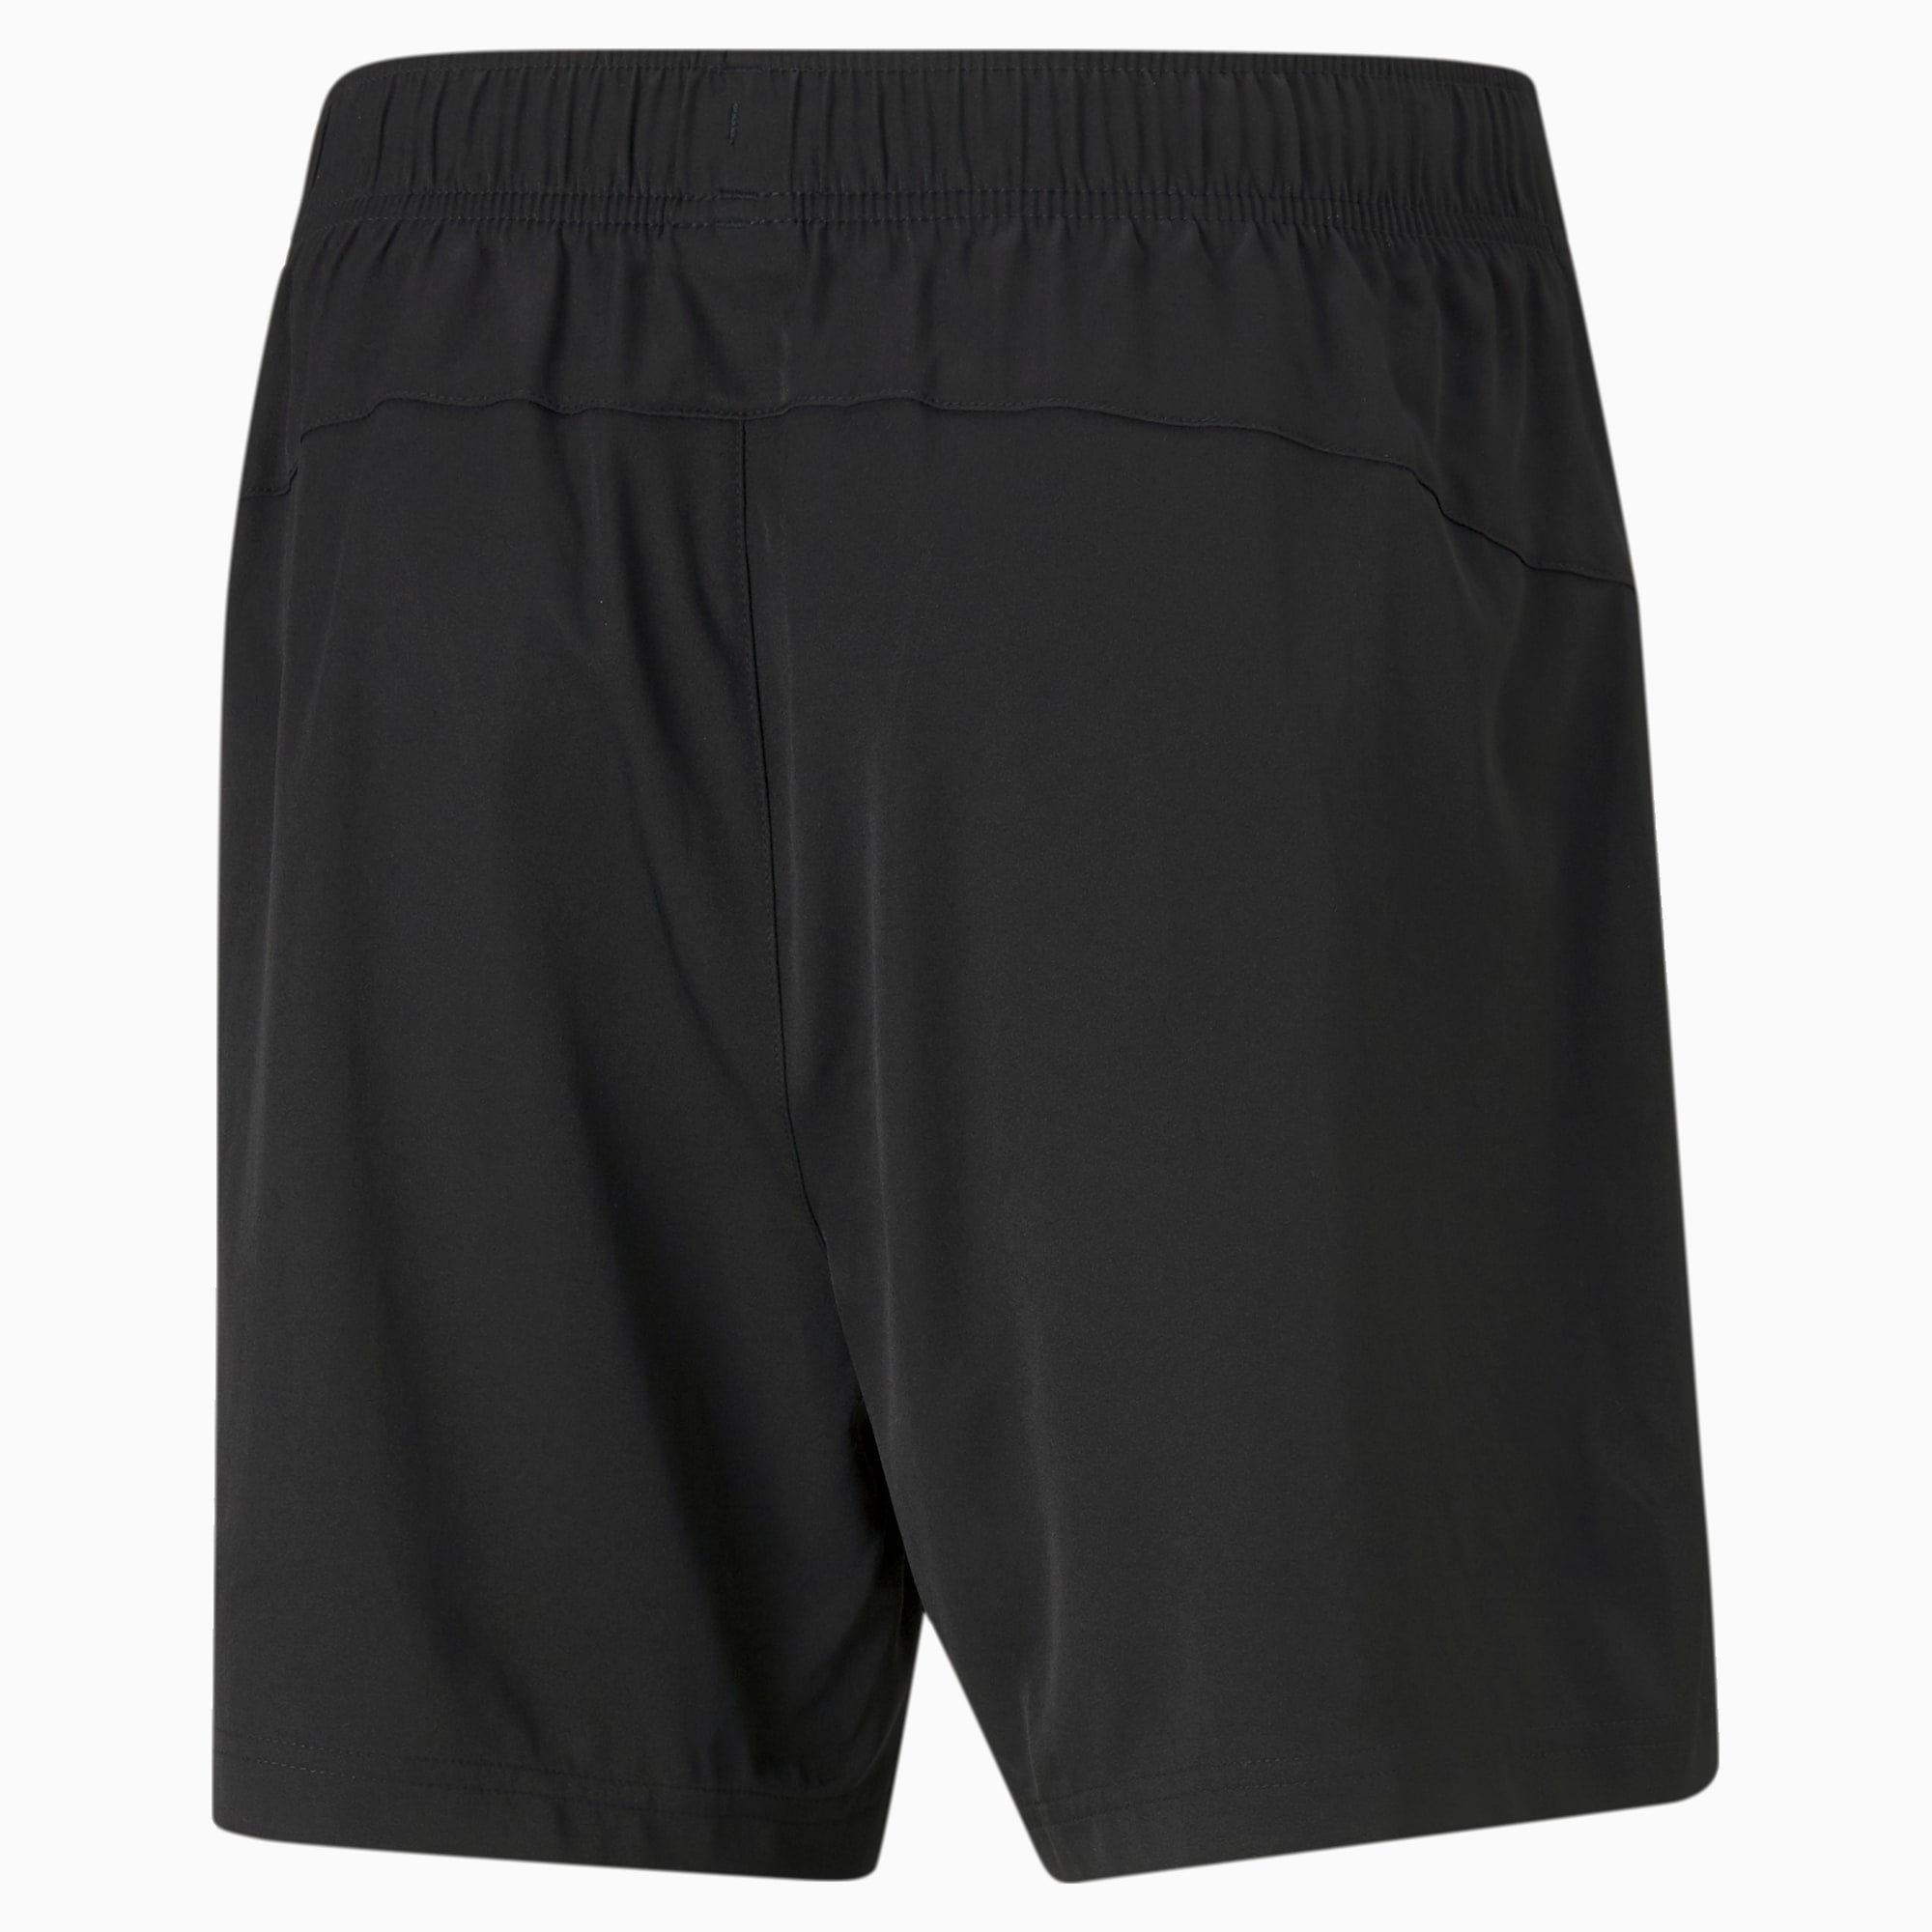 PUMA Active Woven 5 Men's Shorts, Black, Size 4XL, Clothing